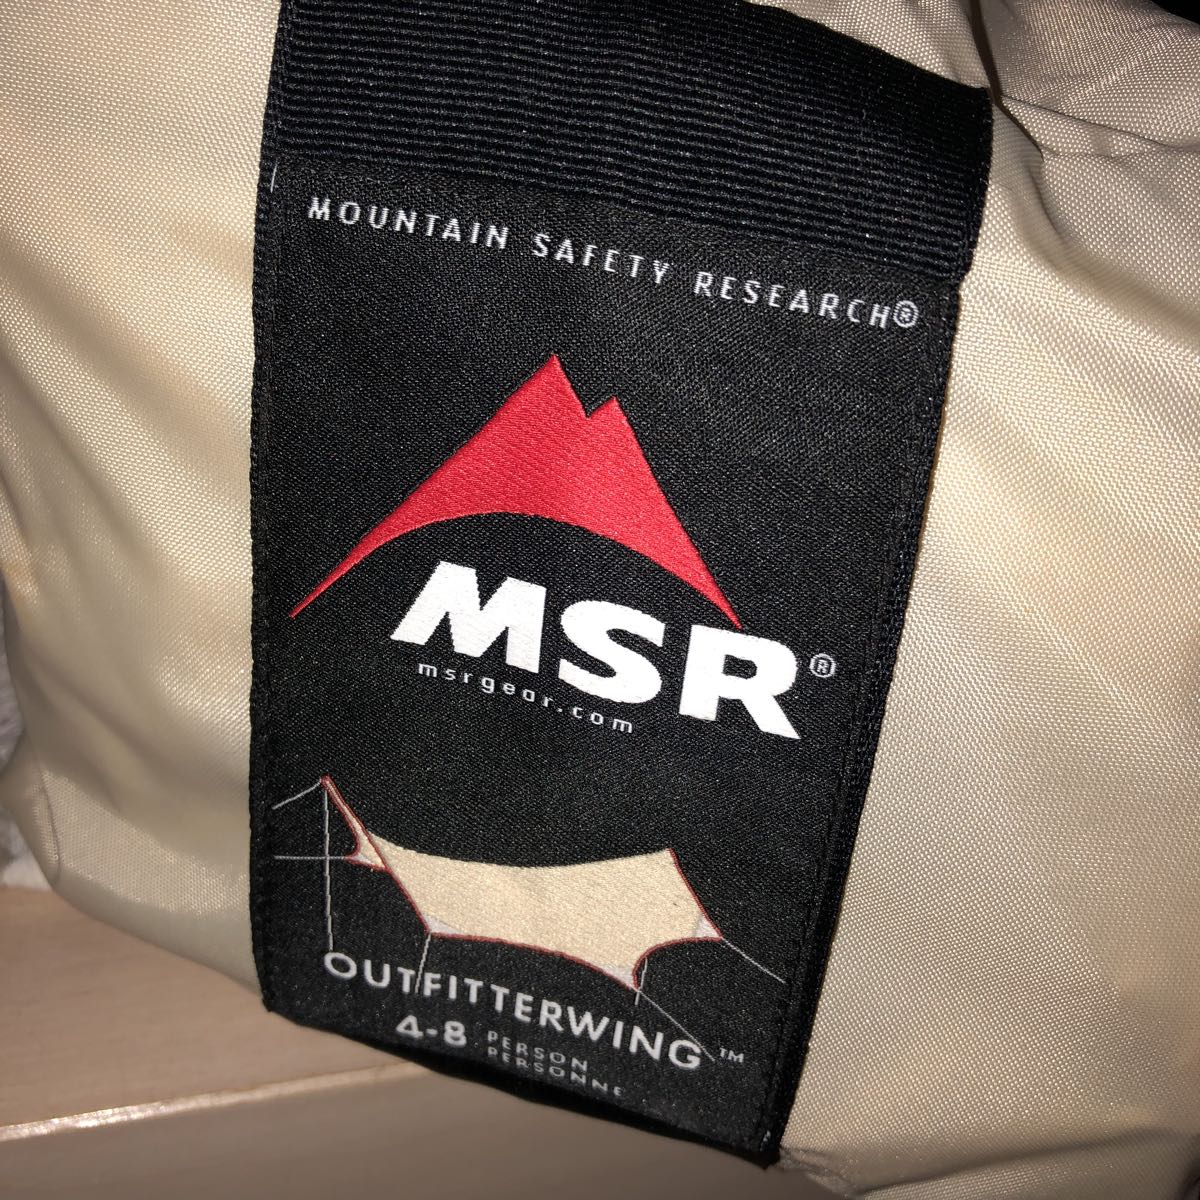 MSR Outfitter翼新文章僅供測試 <Br> MSR アウトフィッターウィング 新品試し張りのみ